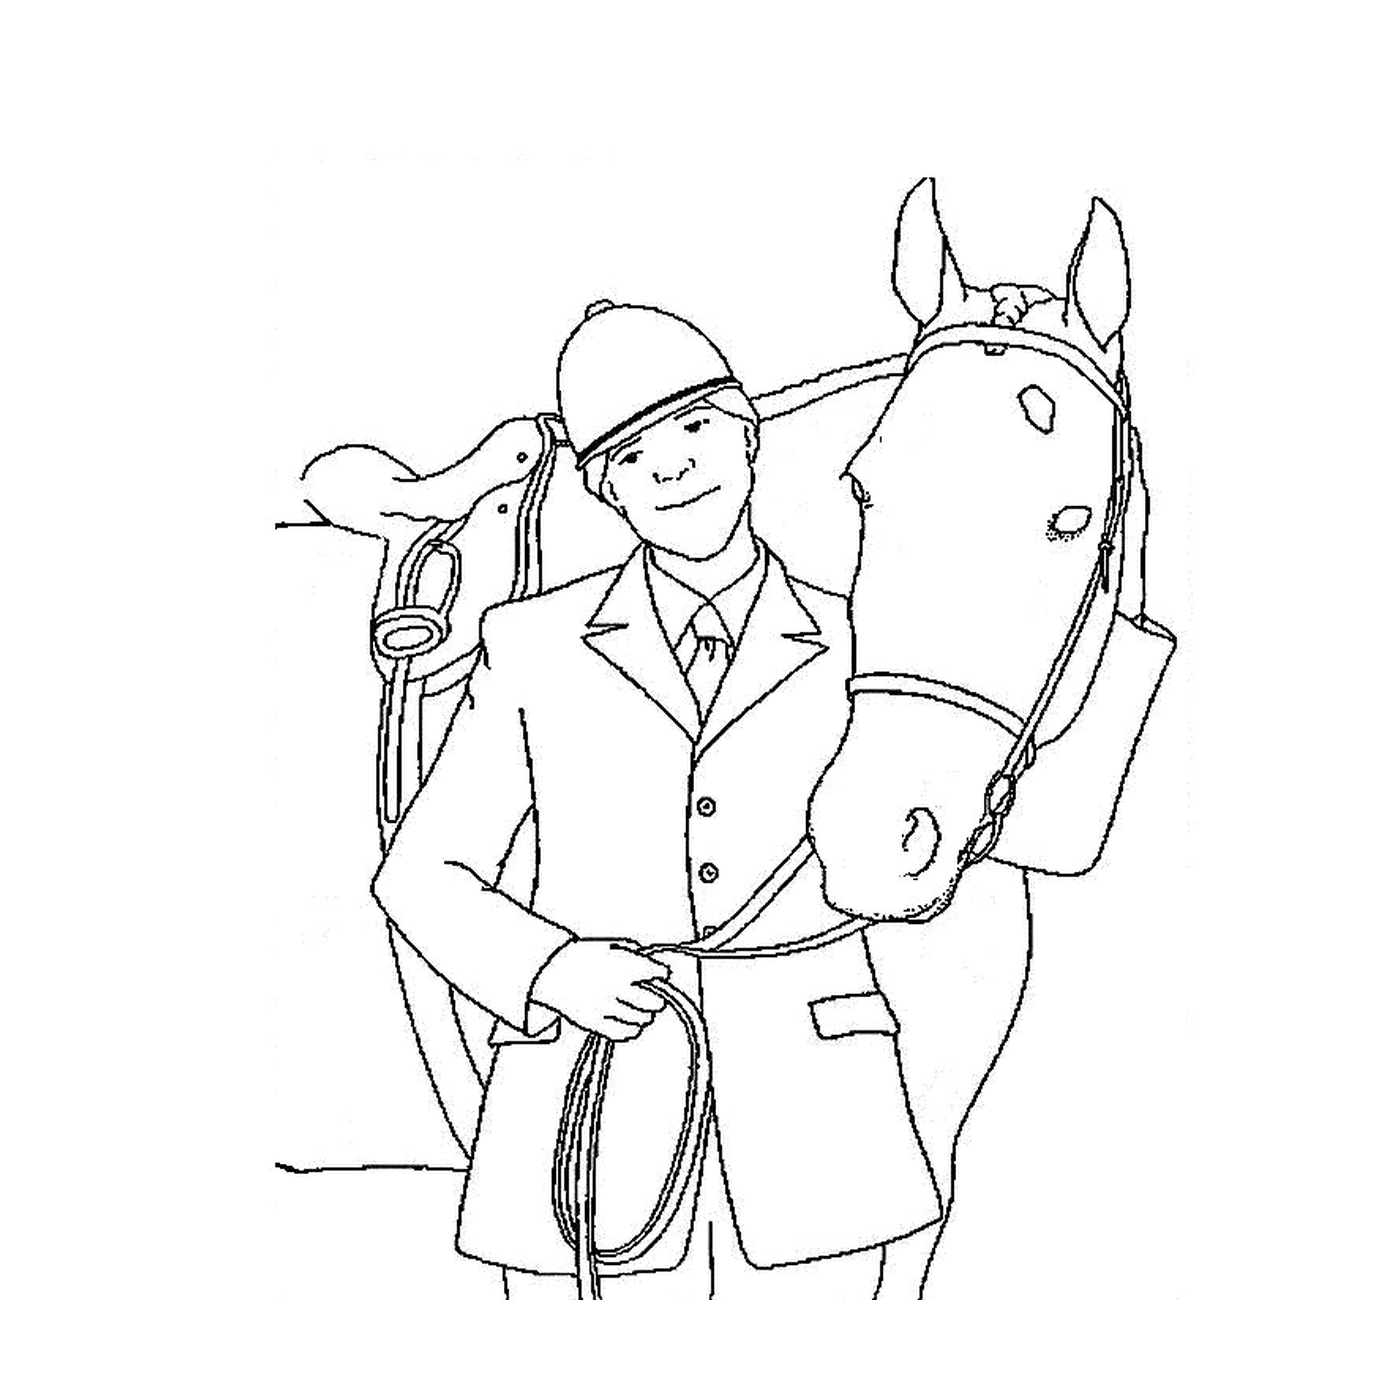  Jinete - Un hombre y un caballo 